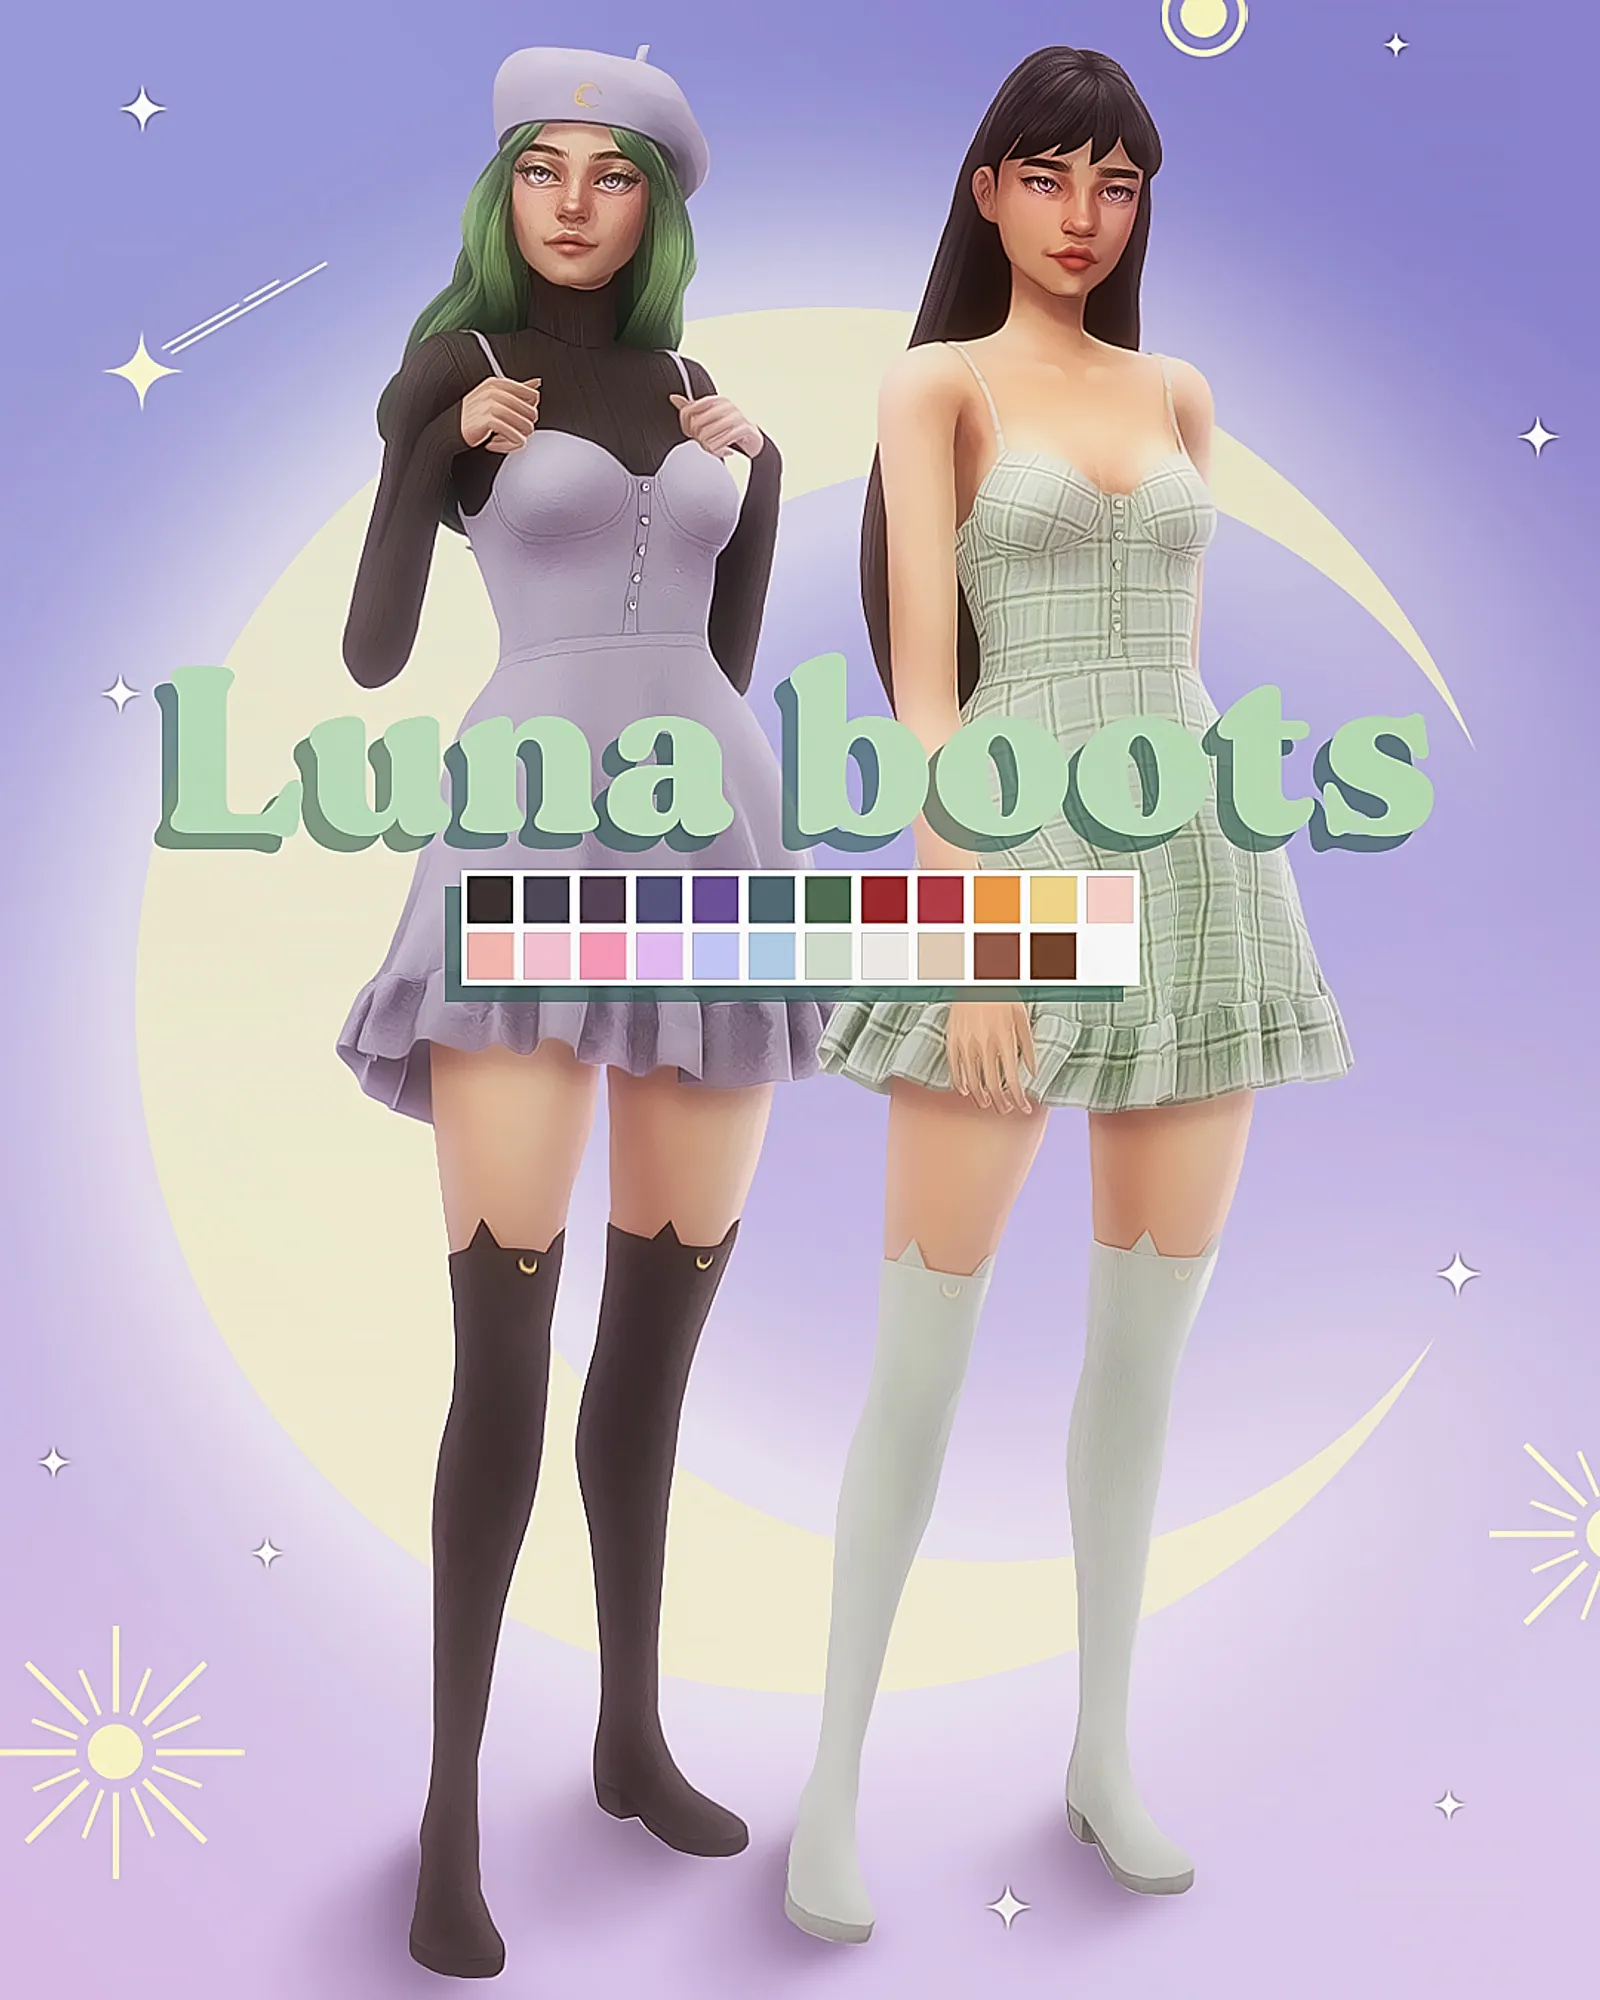 Luna boots